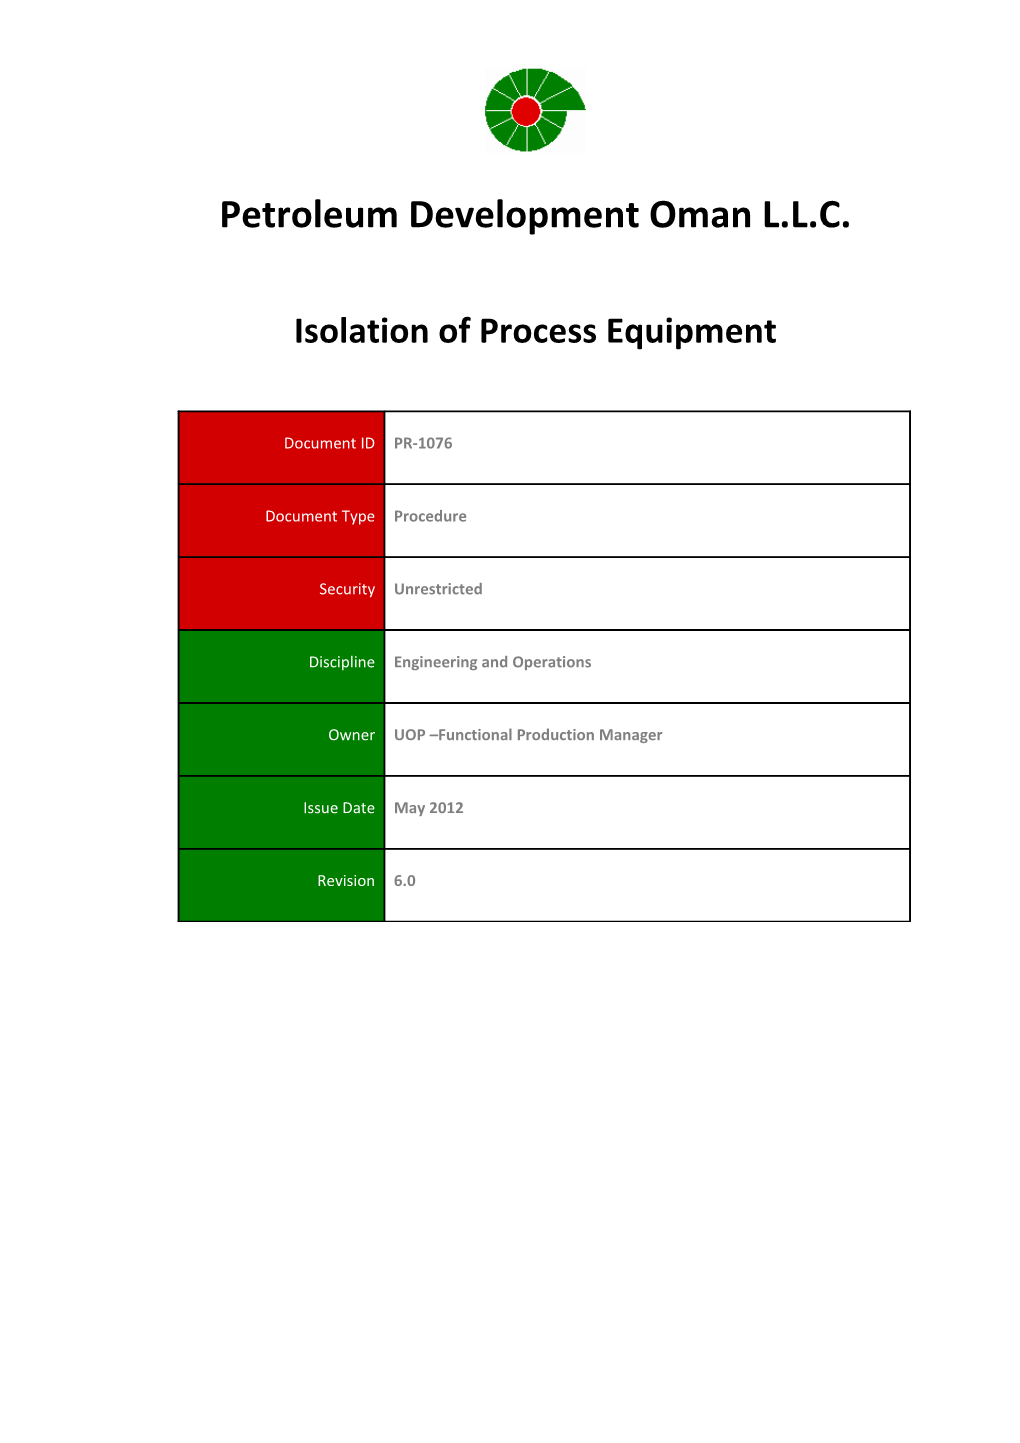 Isolation of Process Equipment Procedure